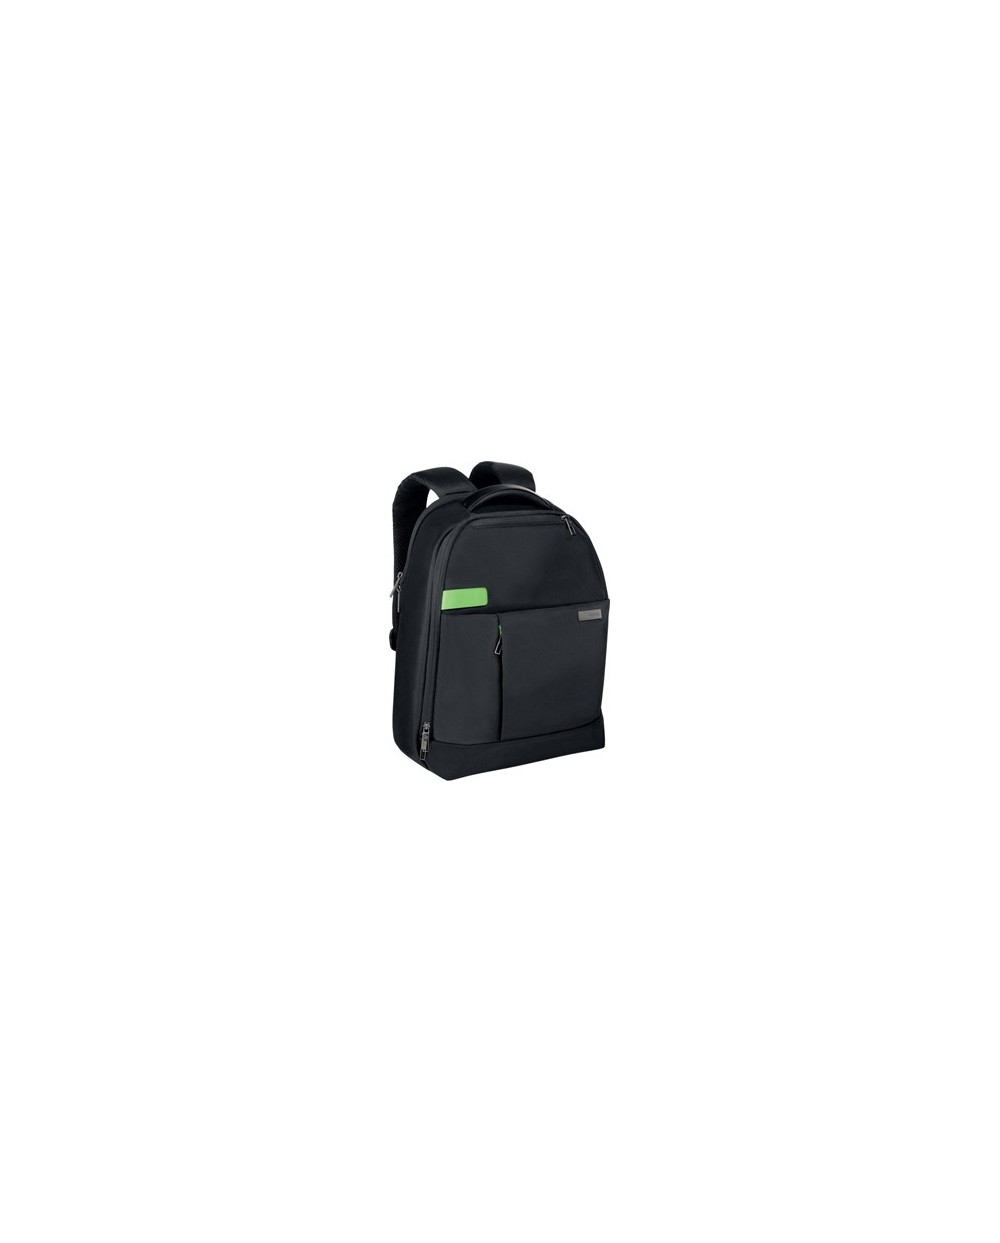 Mochila para portatil leitz 133 negro con asa y bolsillos exteriores 320x430x210 mm